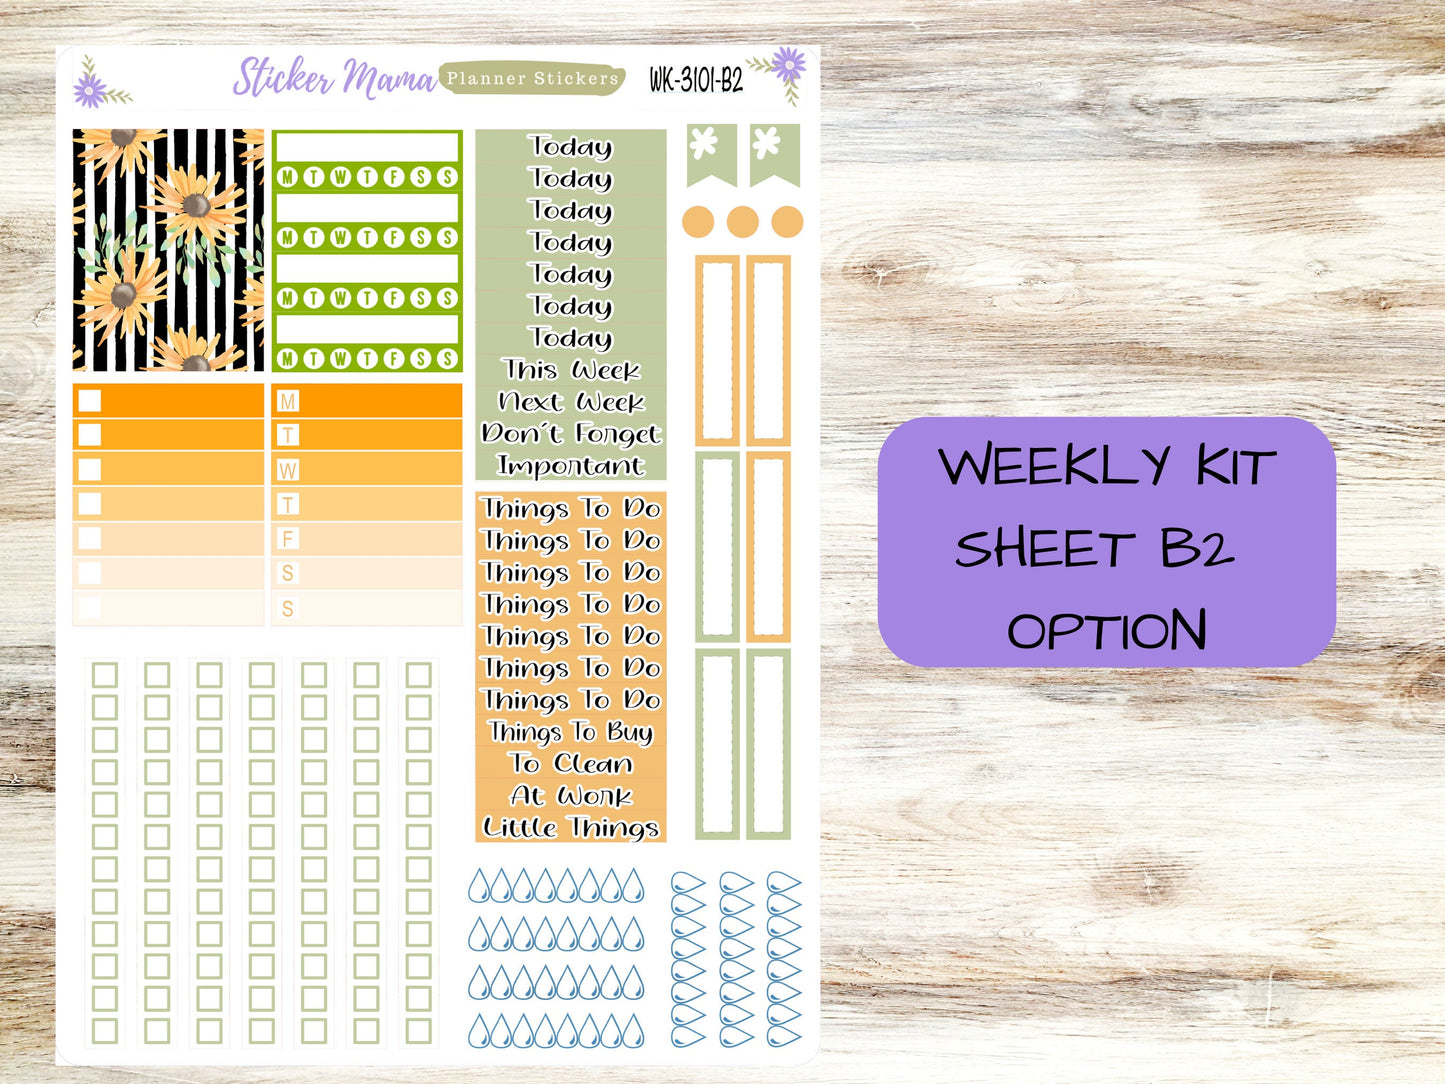 WEEKLY KIT- 3101 - Blooming Sunflowers  || Weekly Planner Kit || Erin Condren || Hourly Planner Kit || Vertical Planner Kit